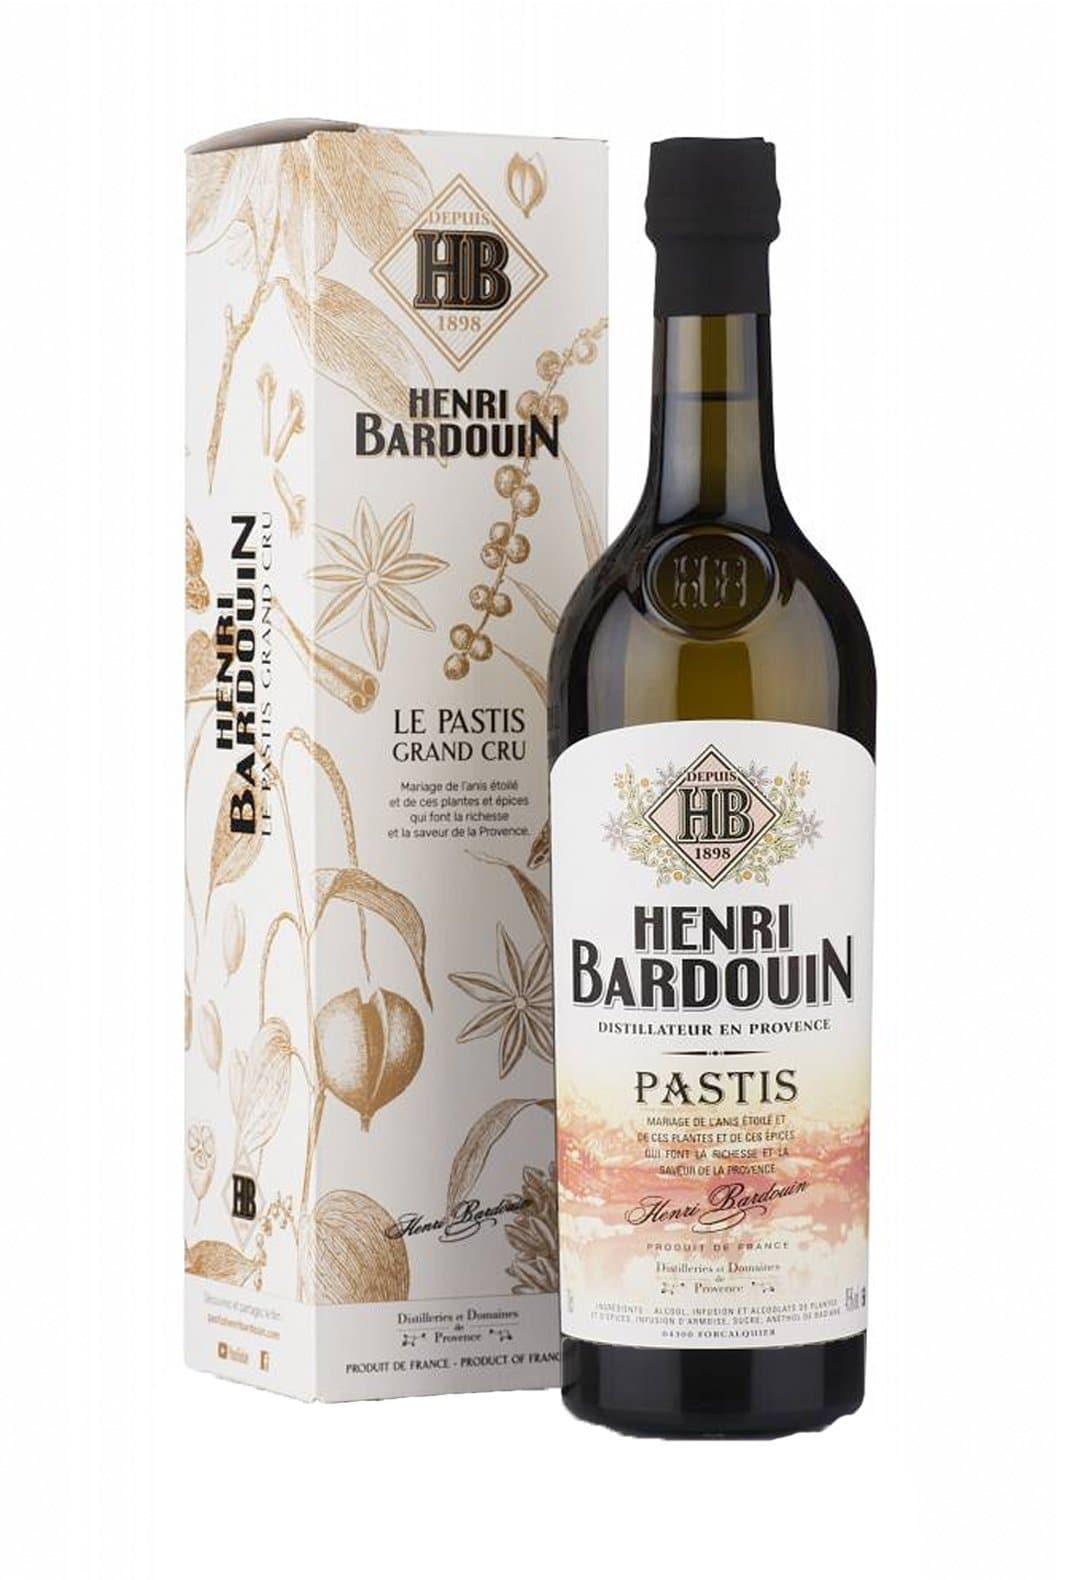 Henri Bardouin Pastis 45% 700ml | Liquor & Spirits | Shop online at Spirits of France